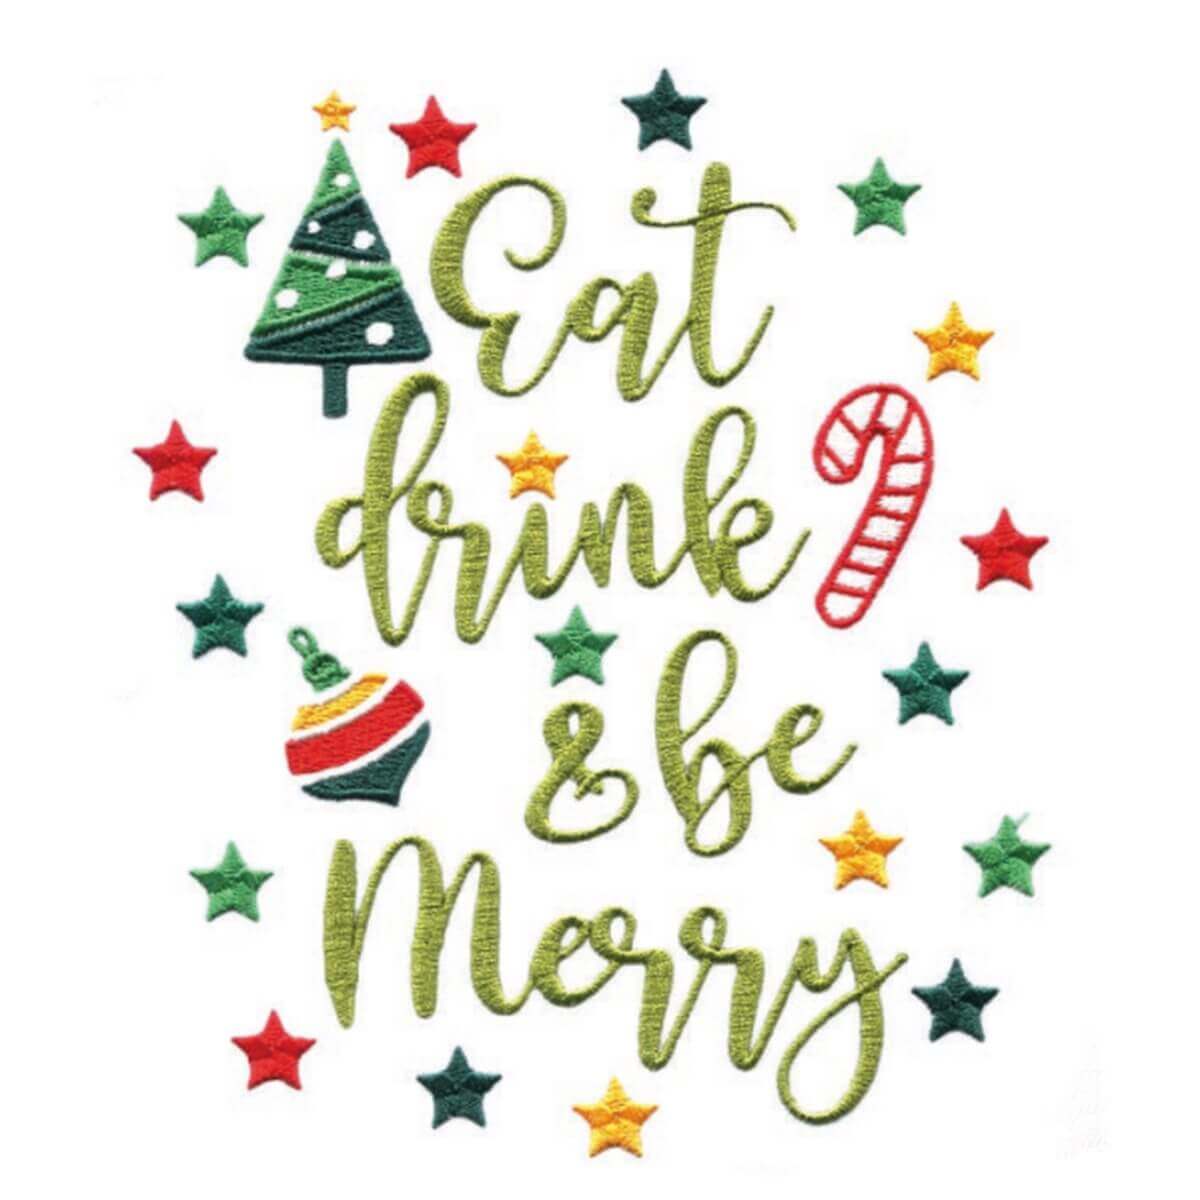 Stickdesign Santa Sayings: Eat Drink Be Merry (Download)